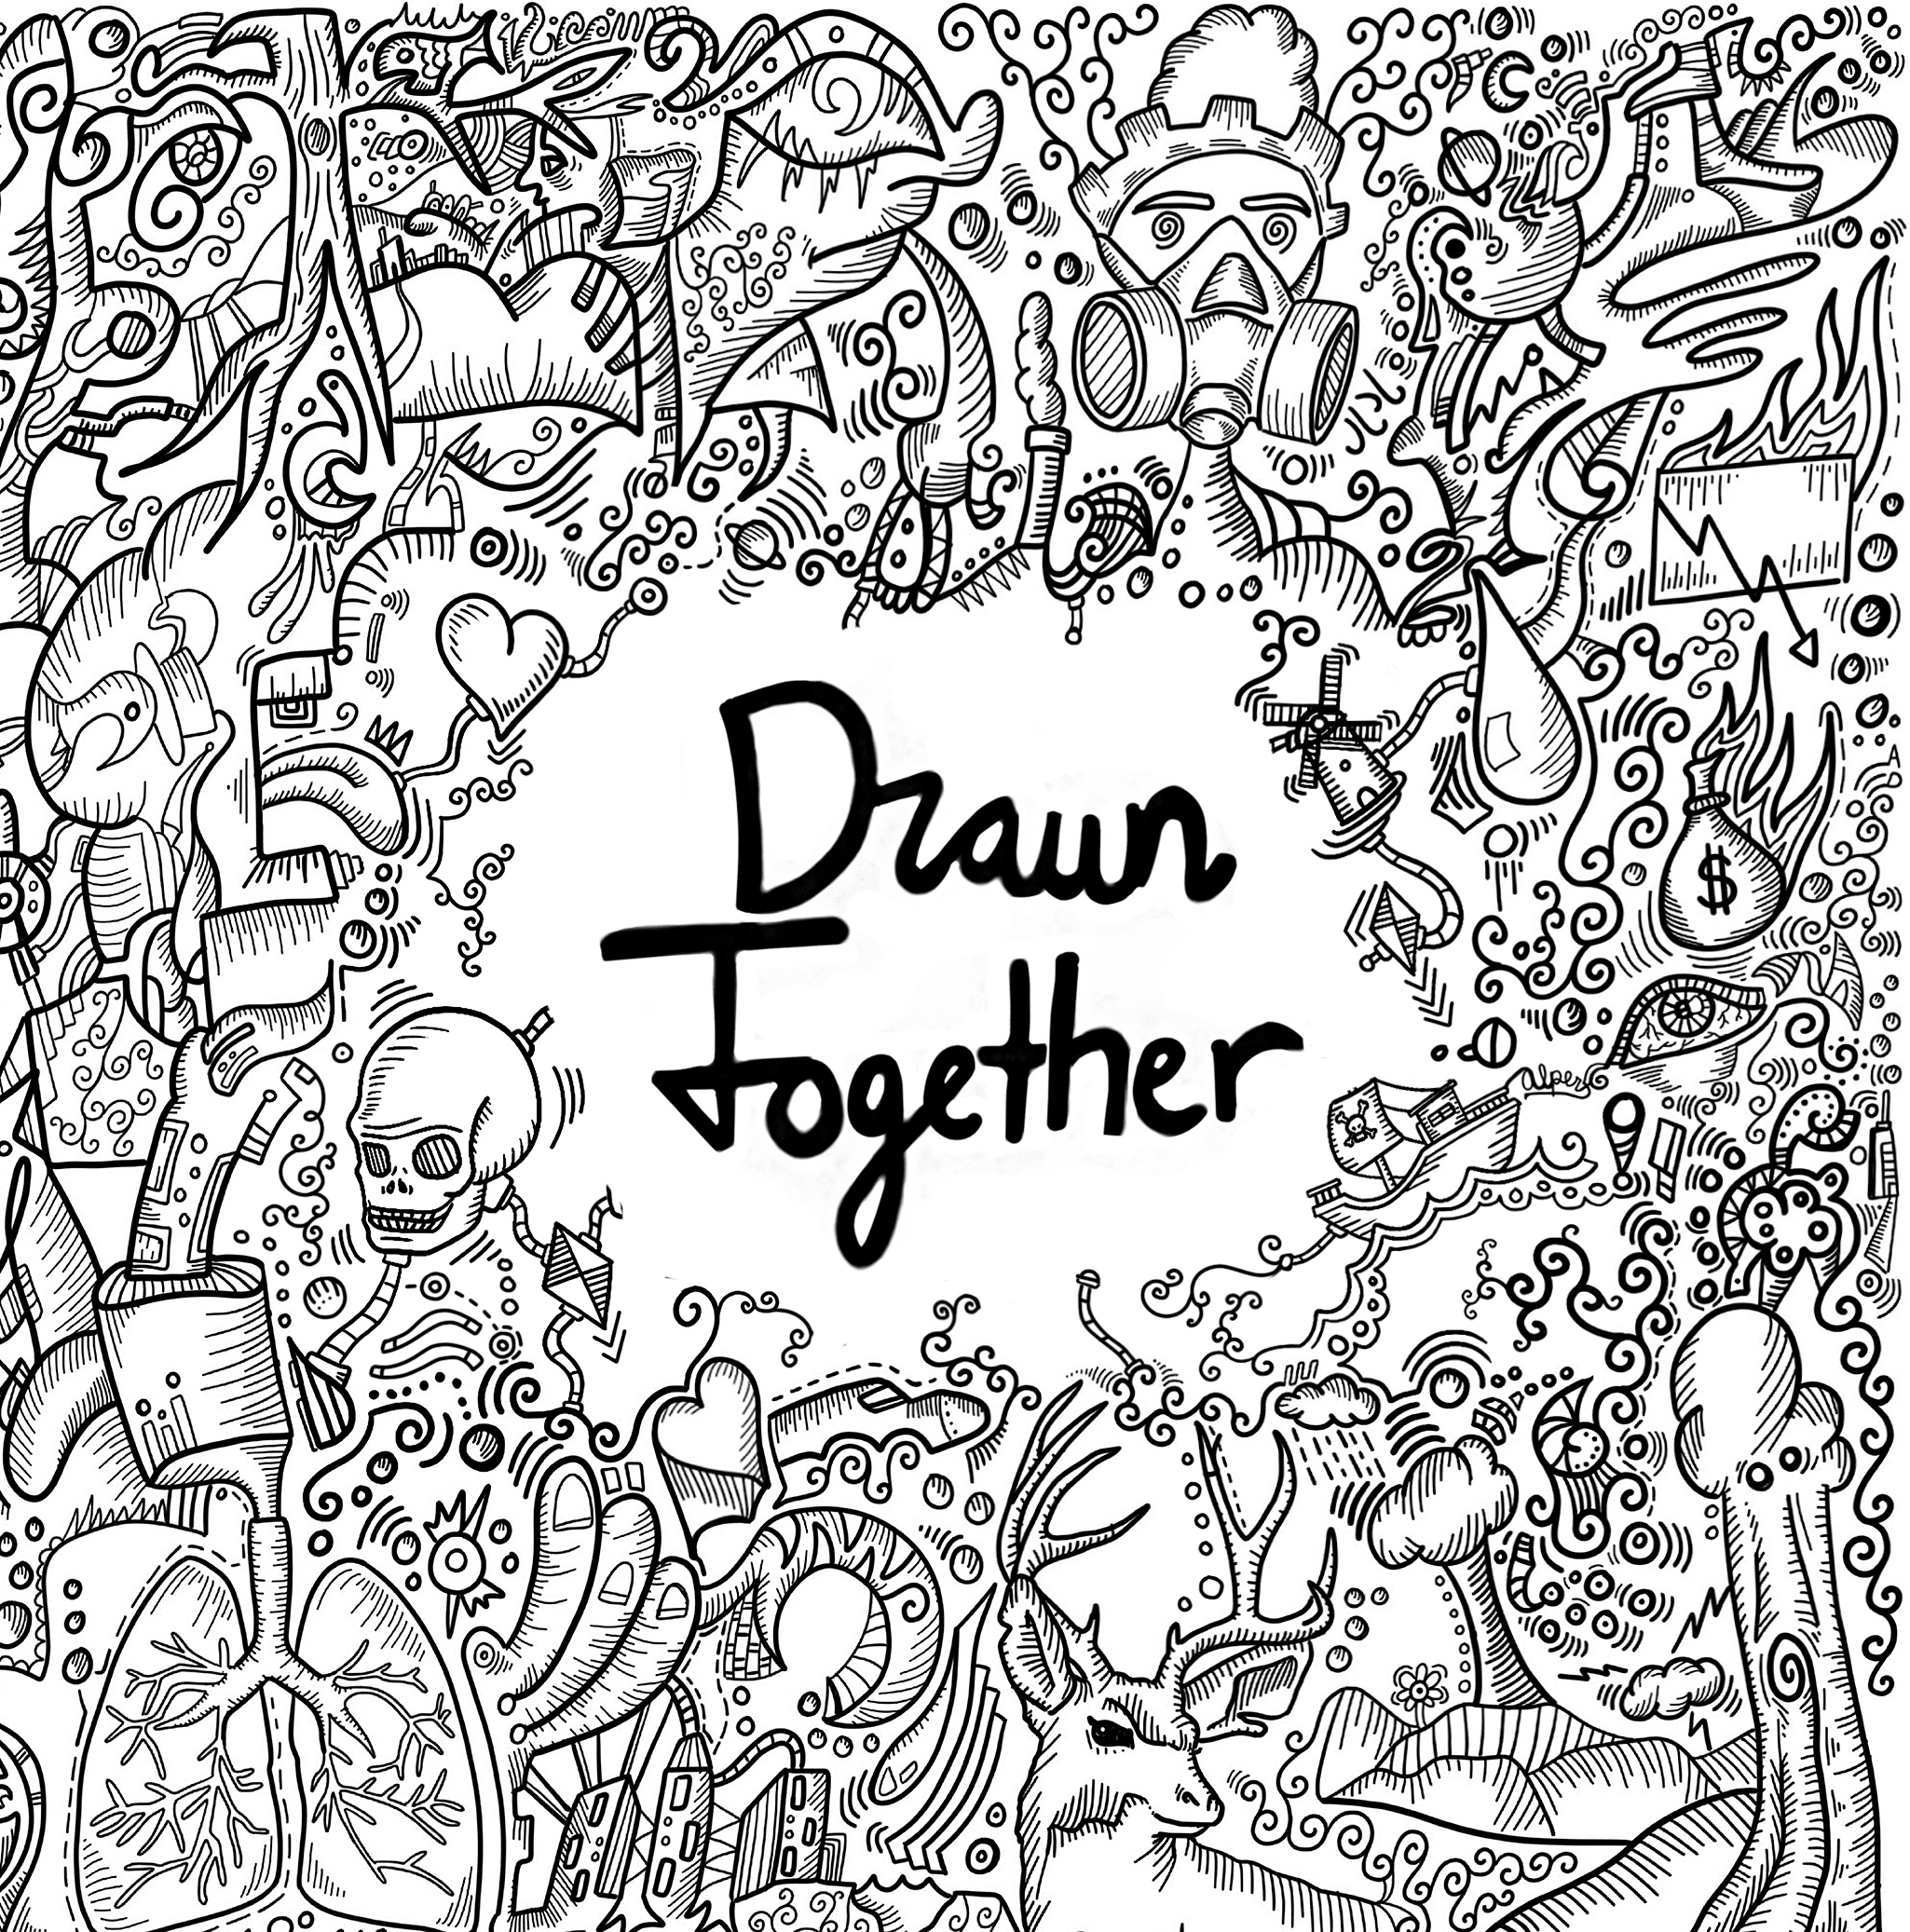 Drawn Together - Mental Health Awareness